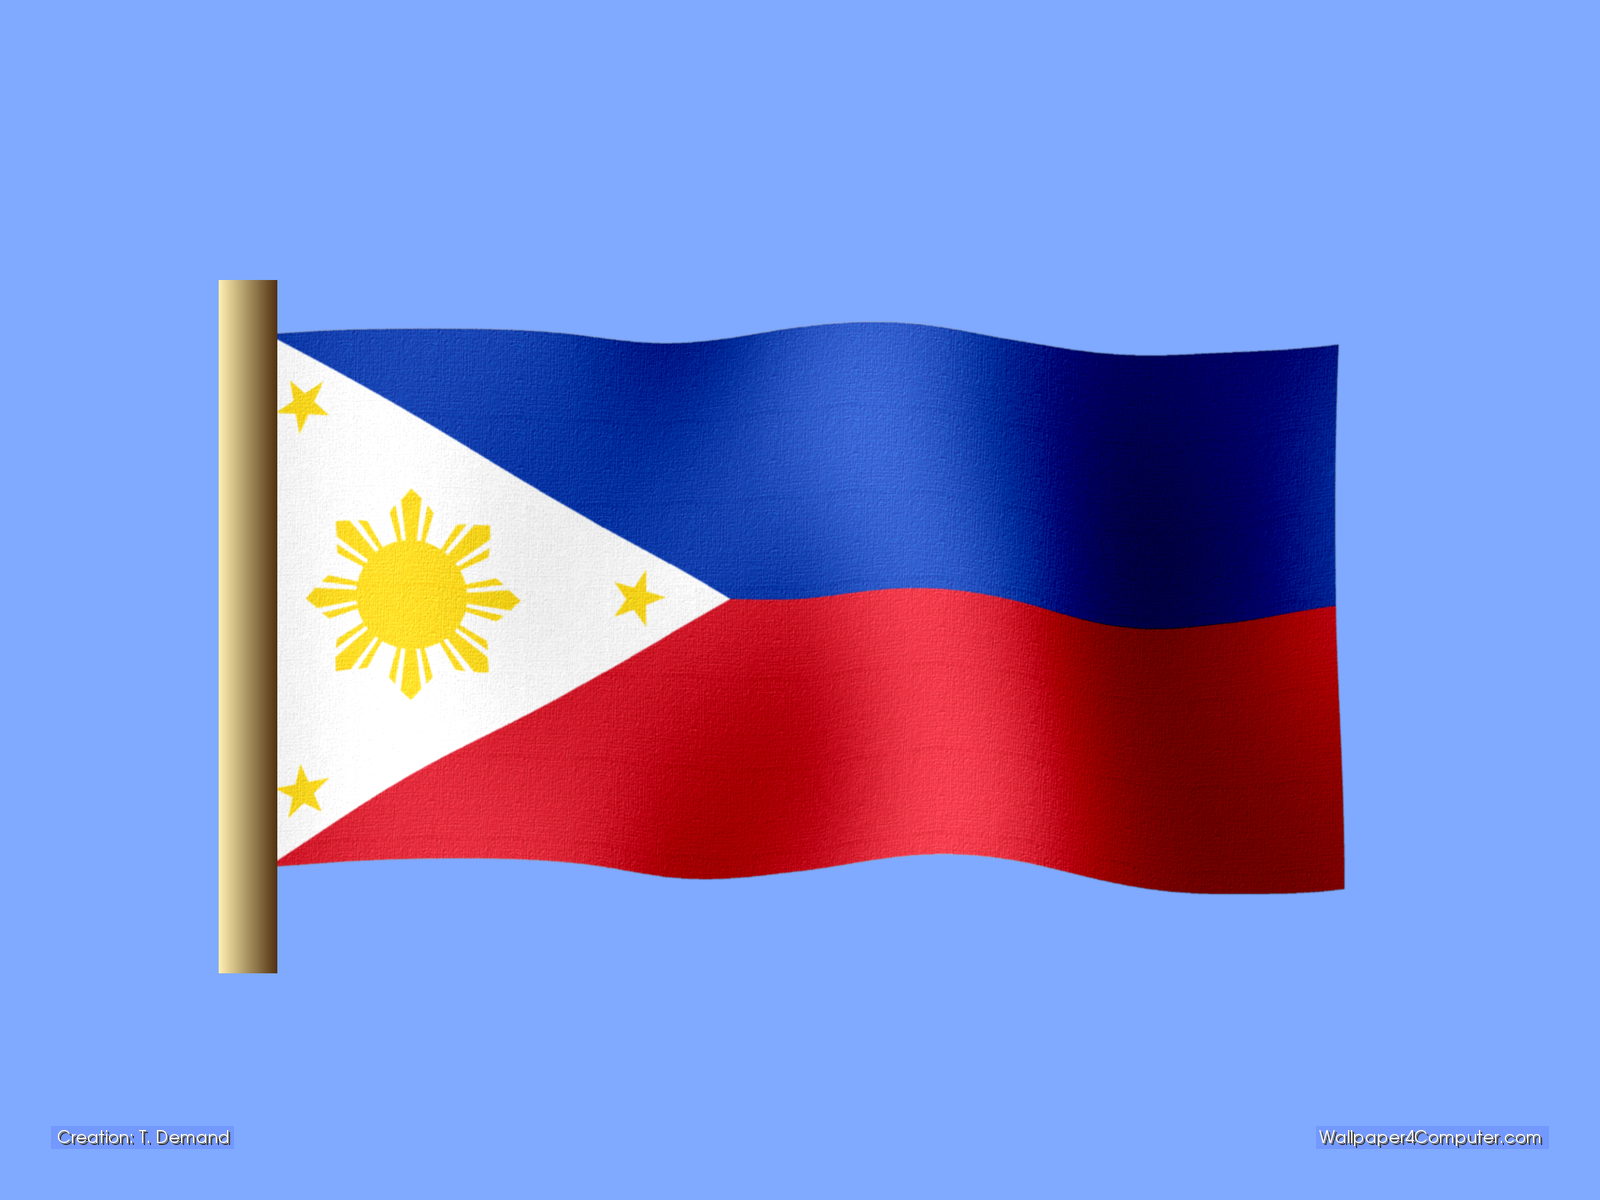 Wallpaper for Computer - Philippine flag desktop wallpaper - 1600 x 1200 